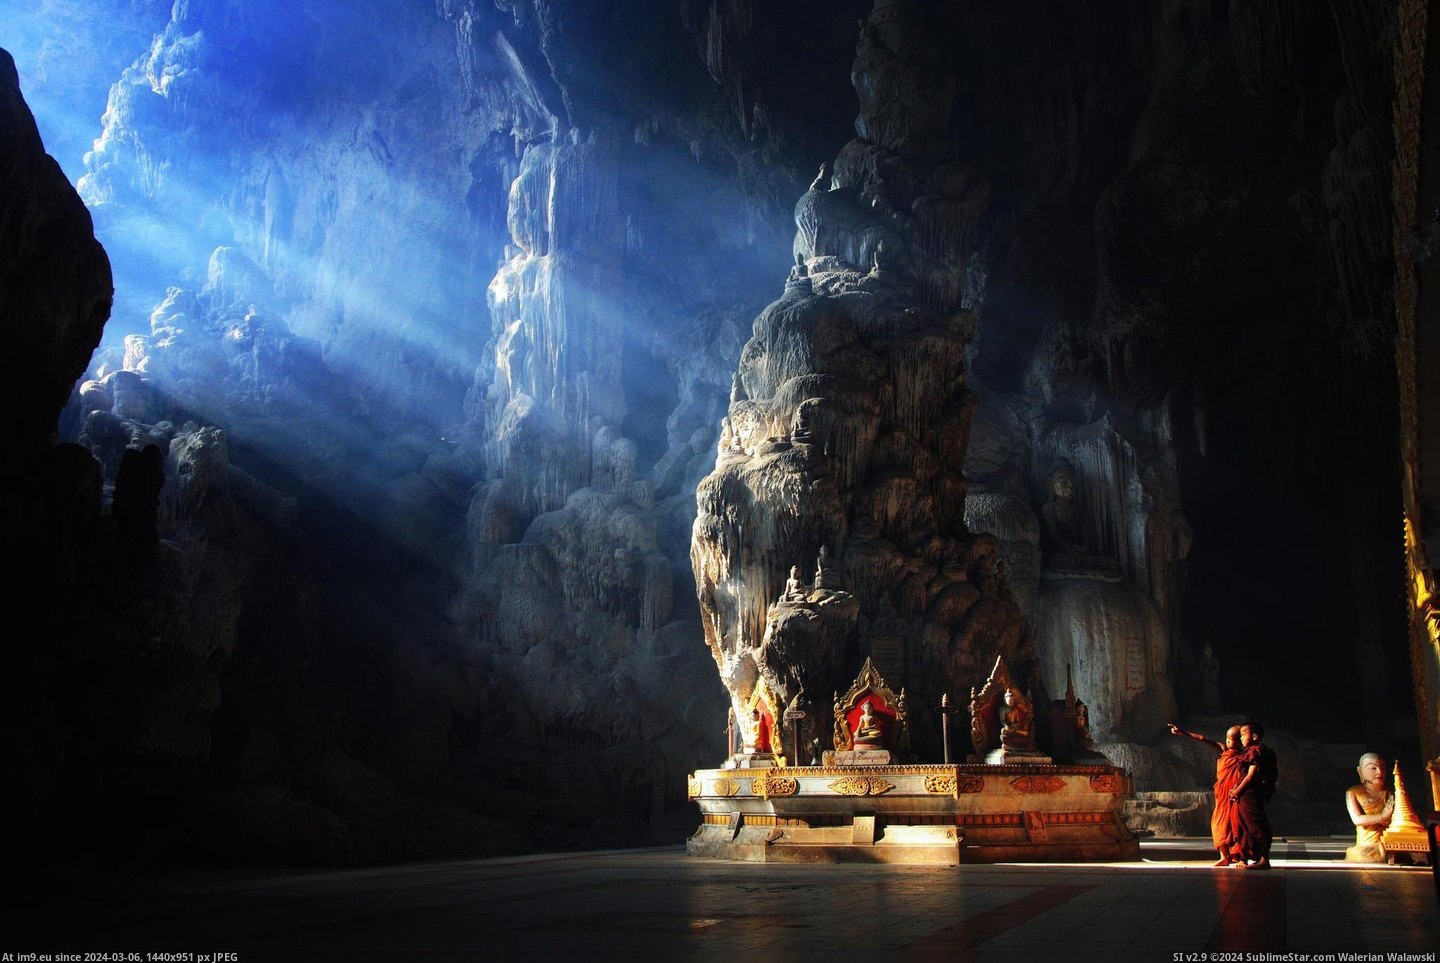 #Cave #Buddhist #Temple [Pics] A Buddhist temple inside a cave. Pic. (Obraz z album My r/PICS favs))